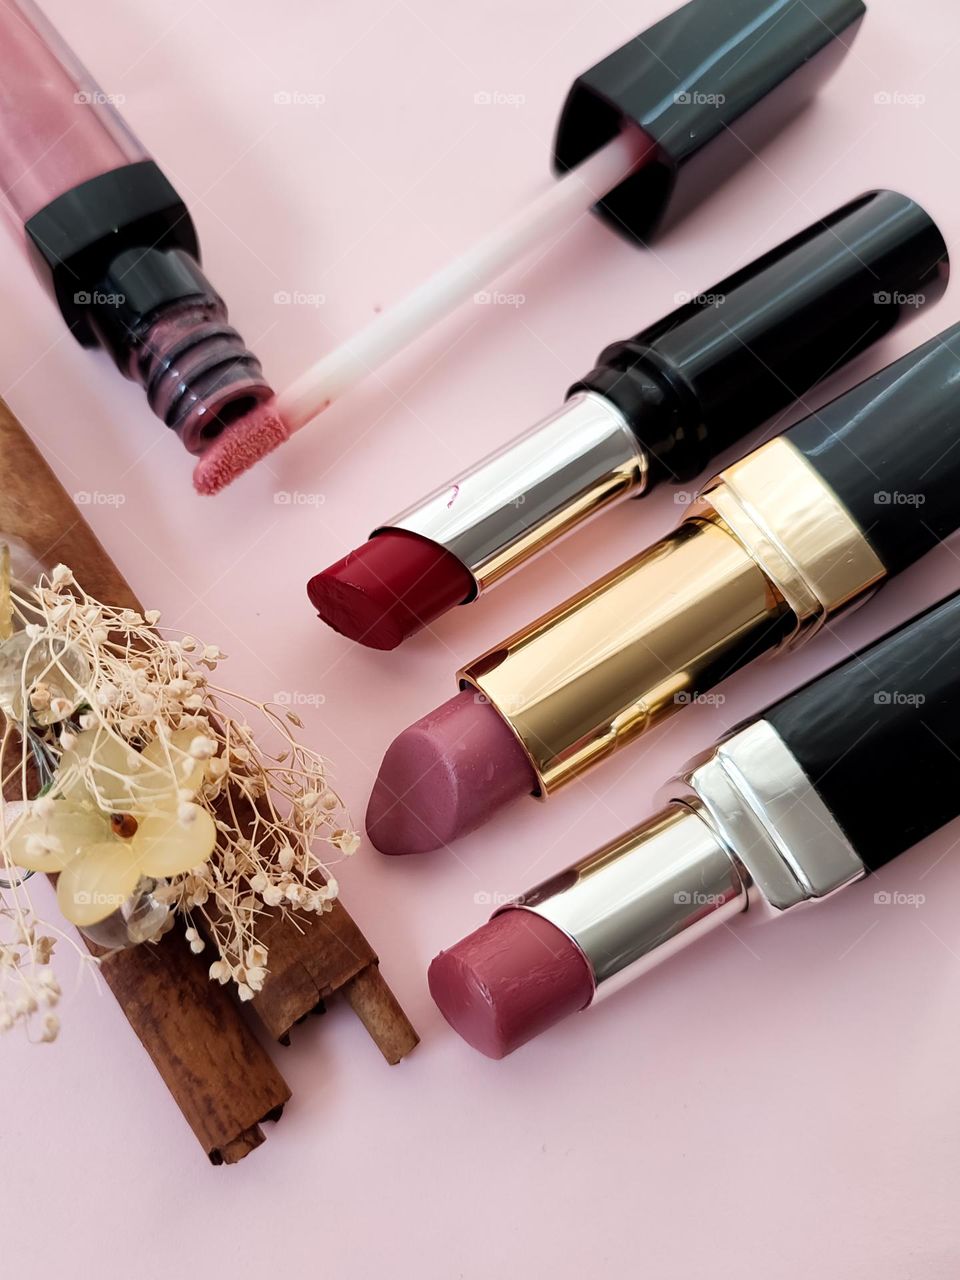 Makeup products Lipsticks